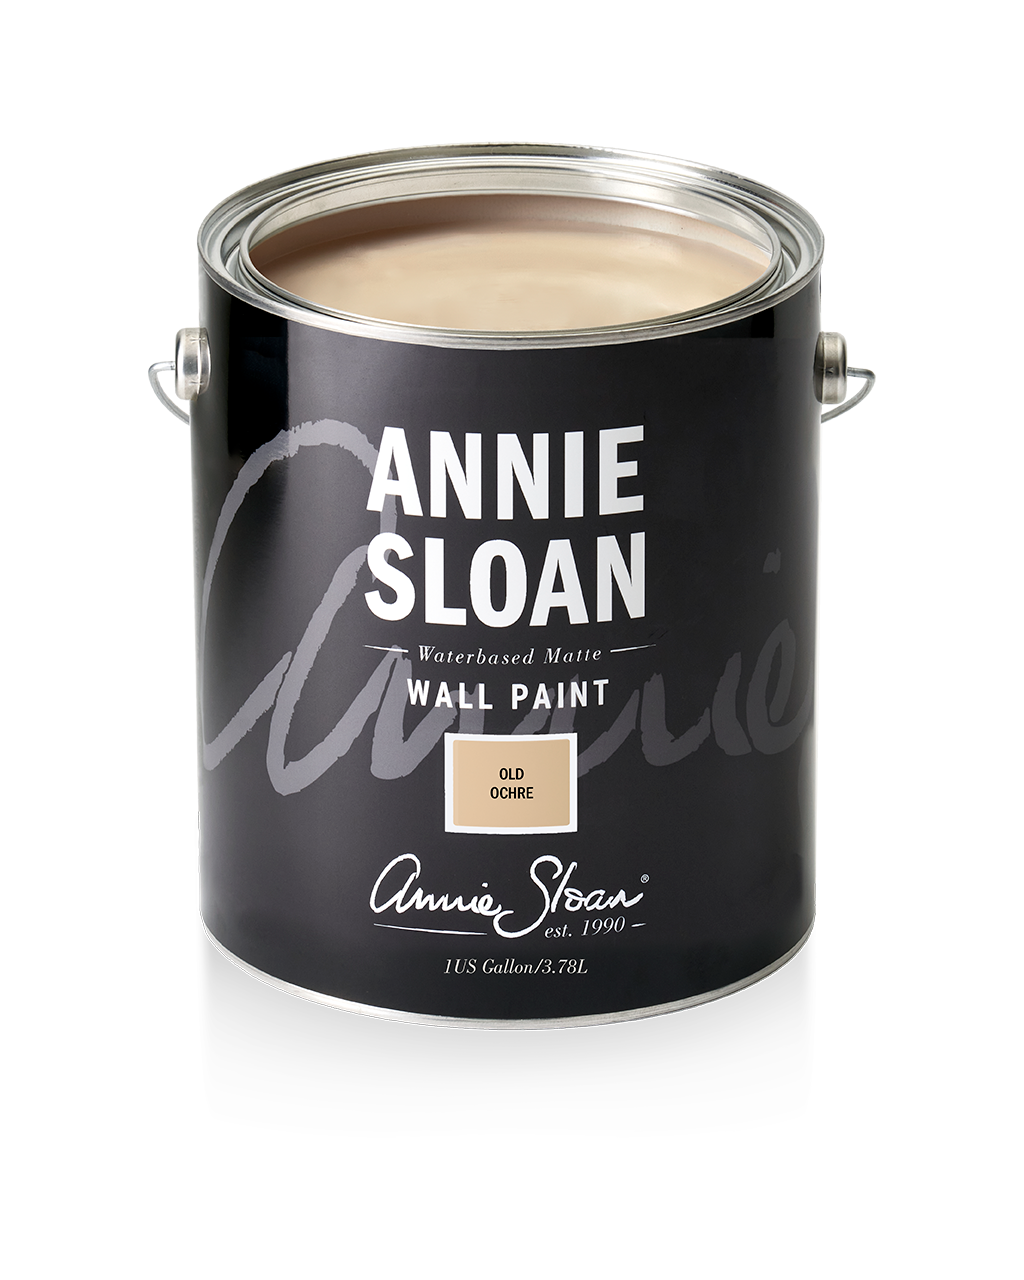 Annie Sloan Wall Paint Old Ochre, 1 Gallon